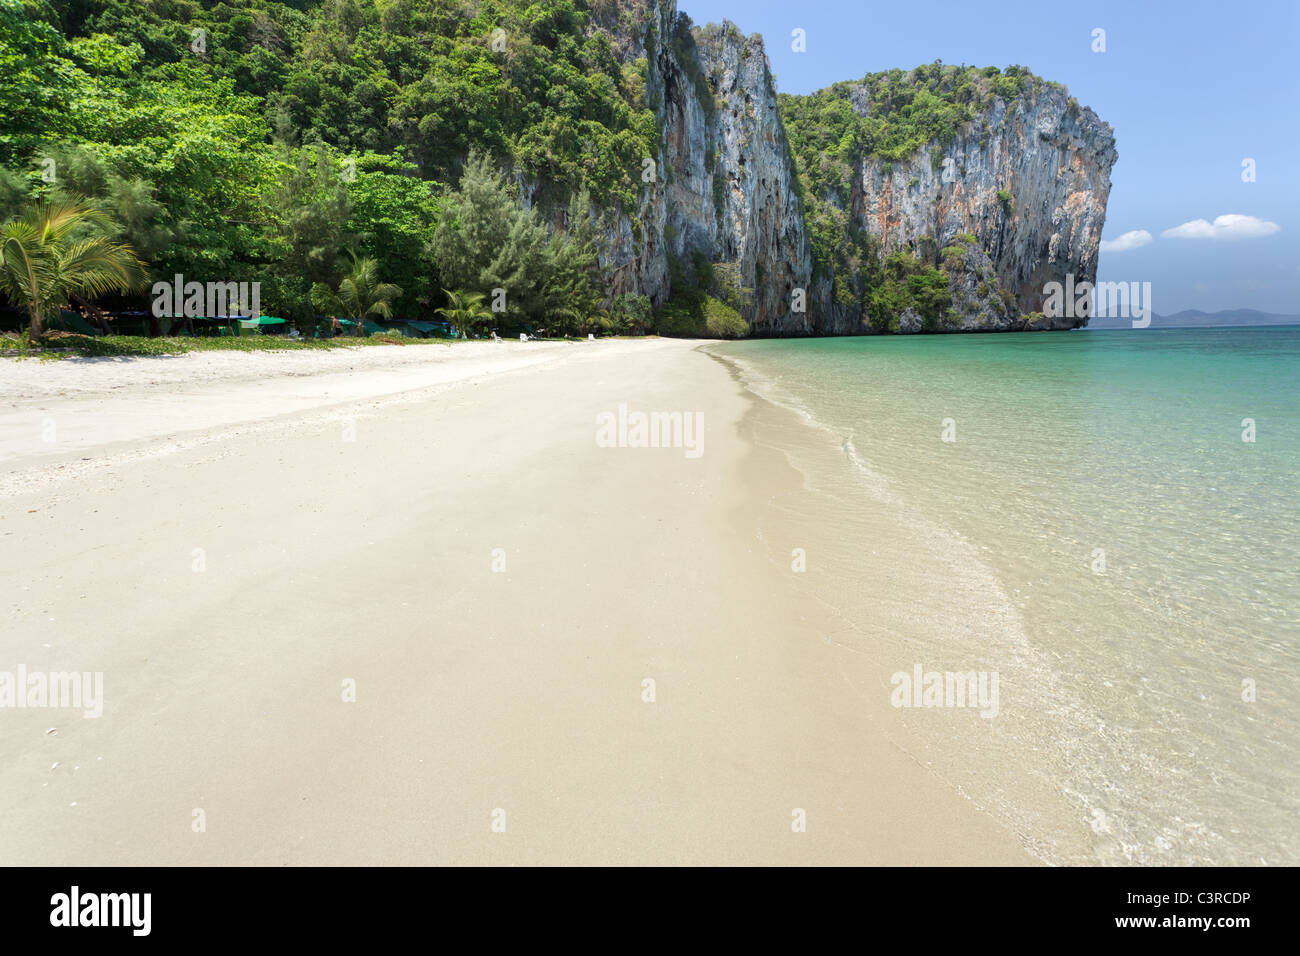 beach of tropical karstic island ko laoliang in thailand Stock Photo